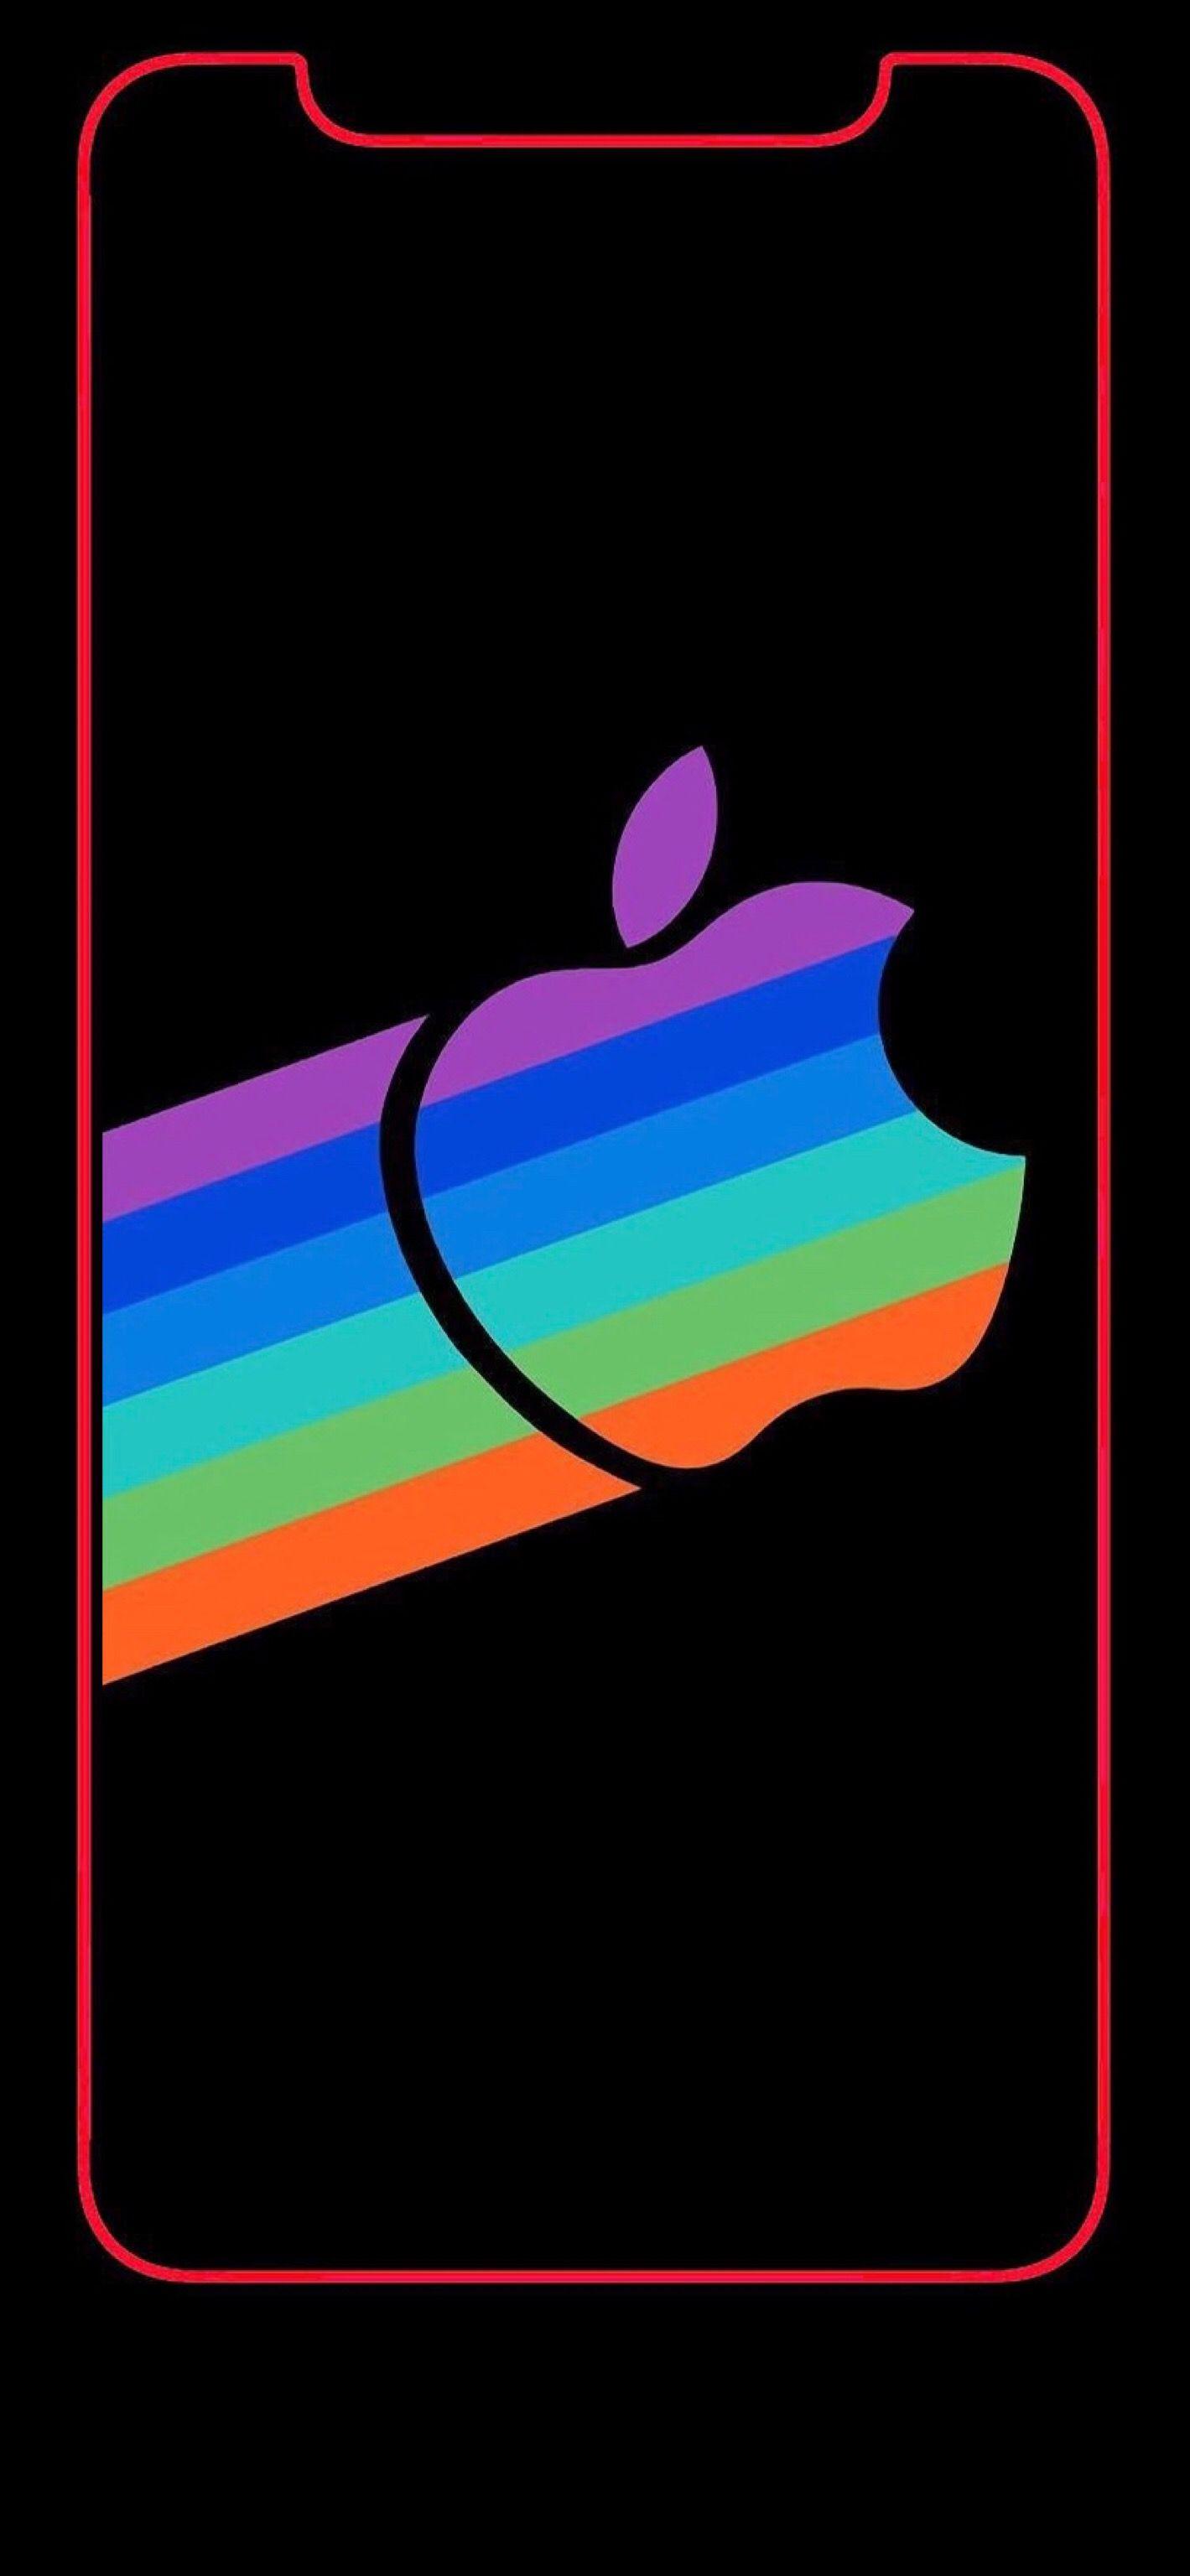 Wallpaper iPhone X logo rainbow 1. Apple iphone wallpaper